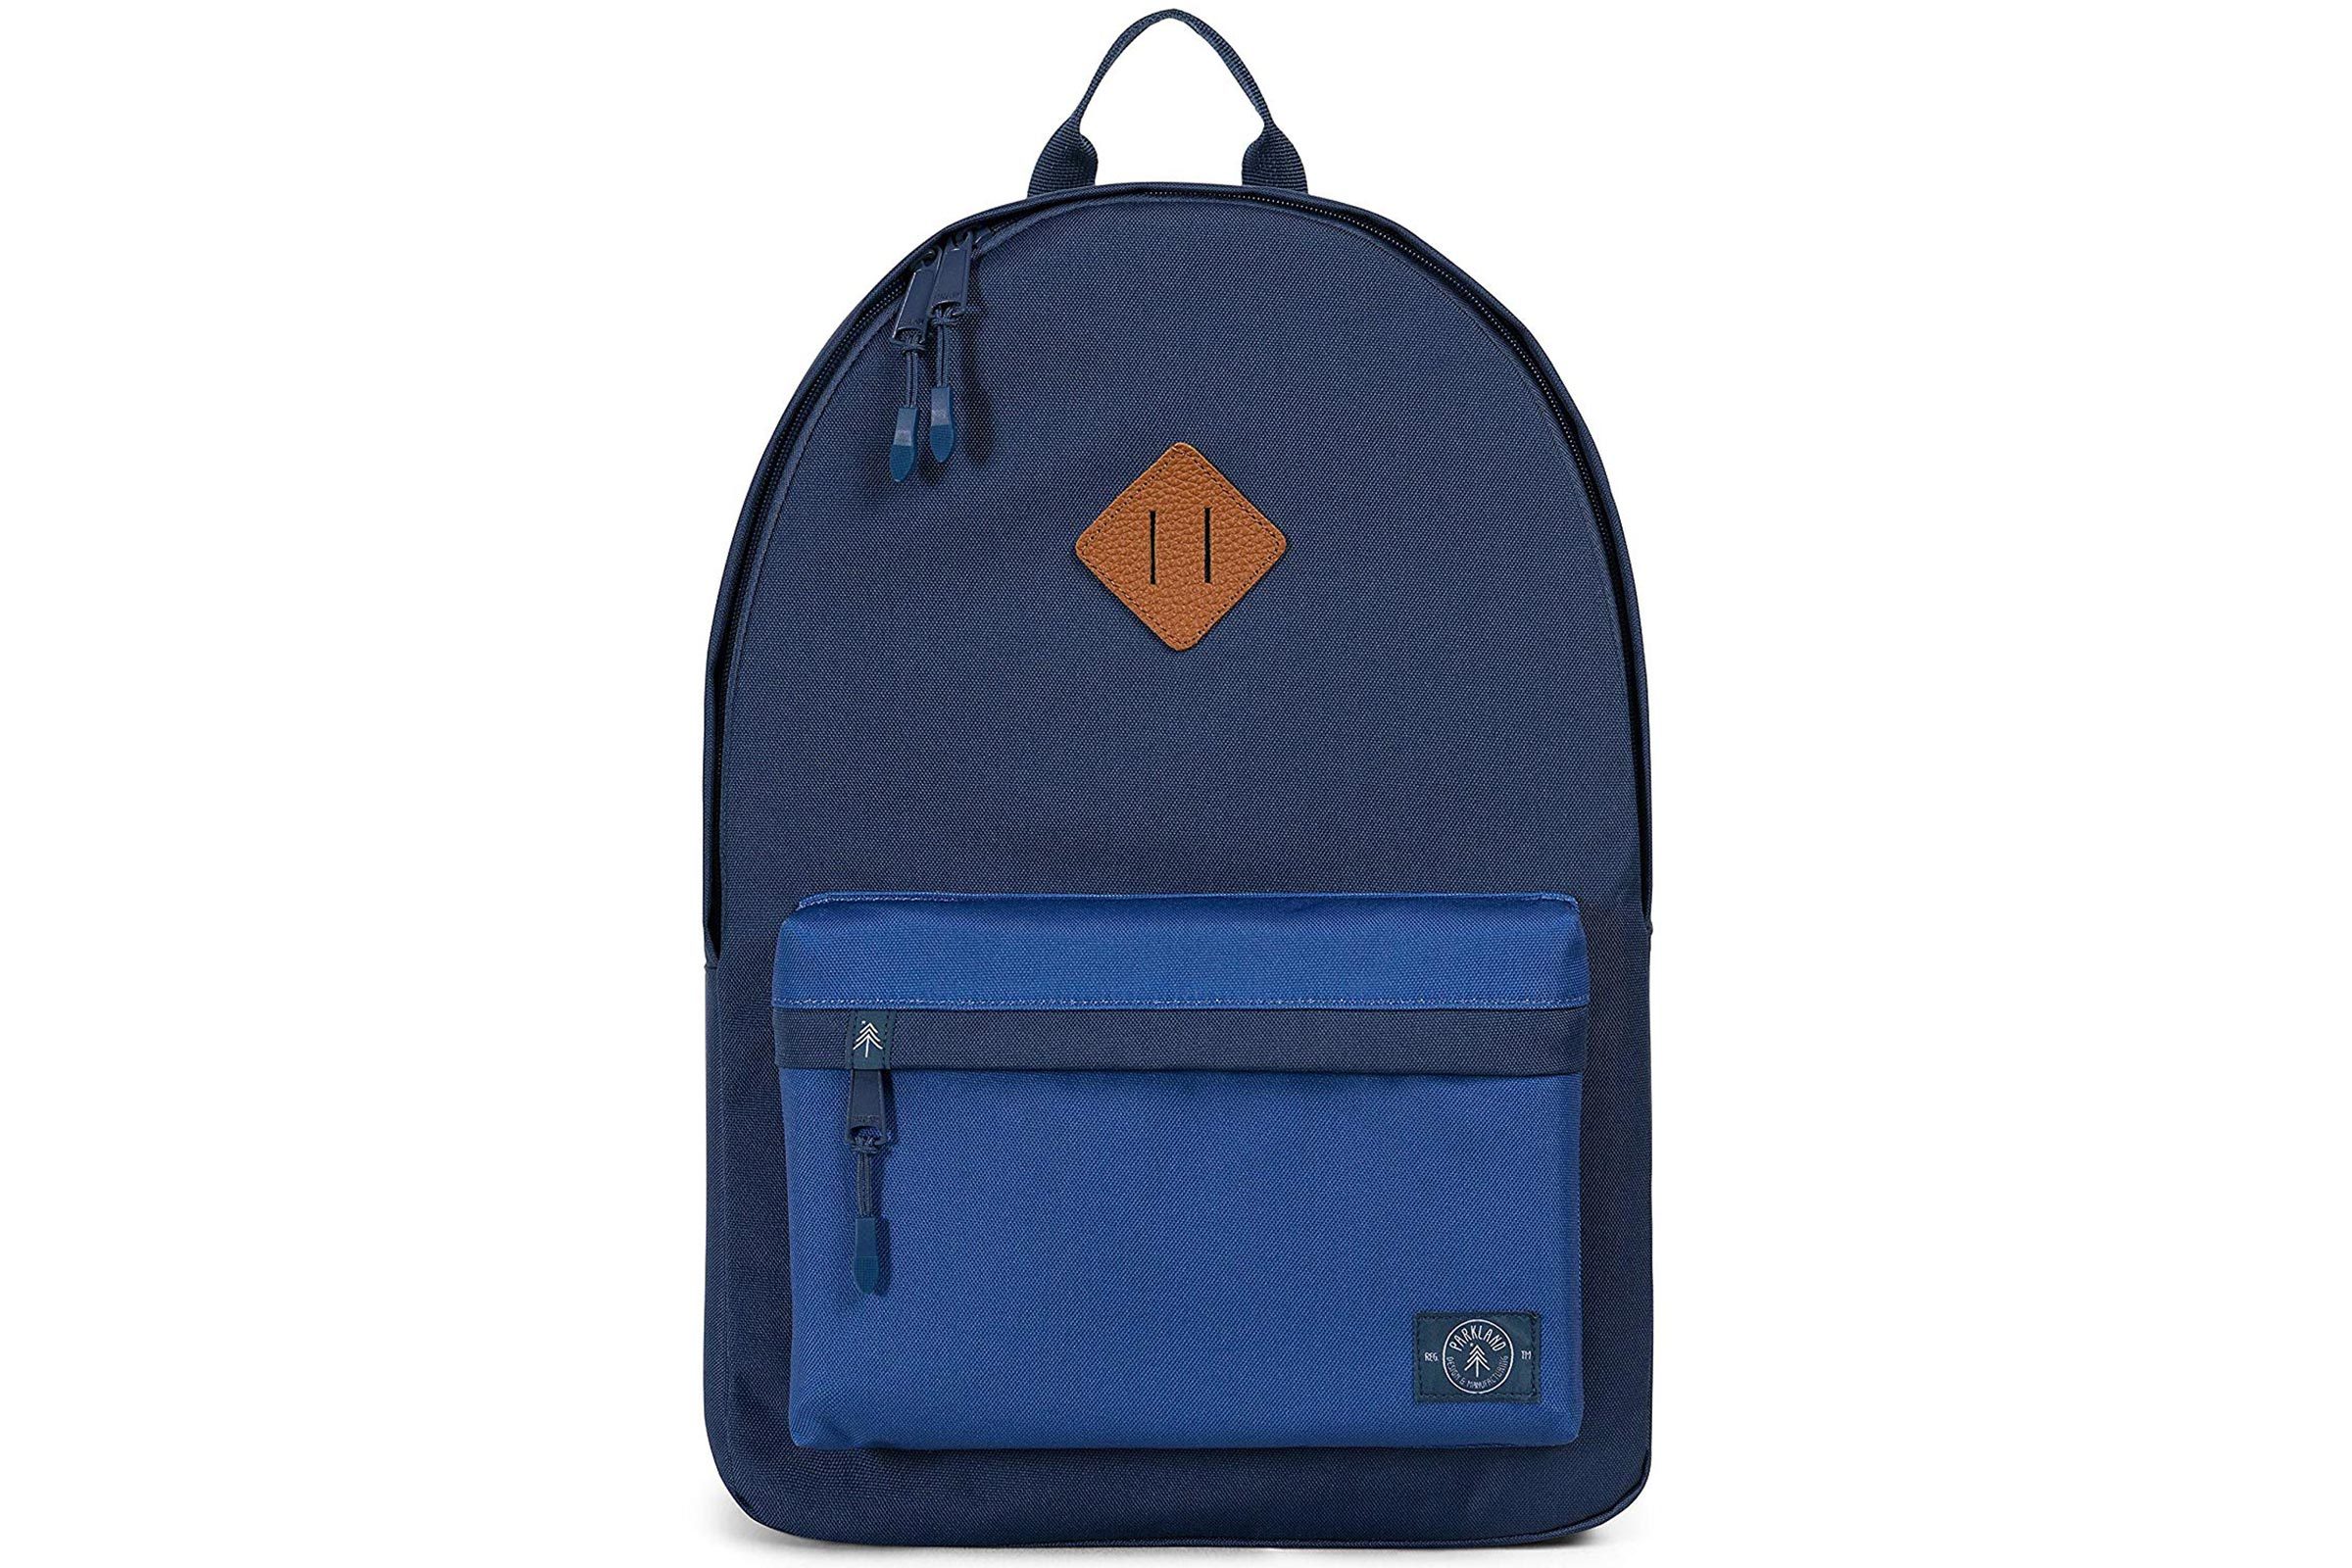 Yoobi Backpack & School Supply Drive